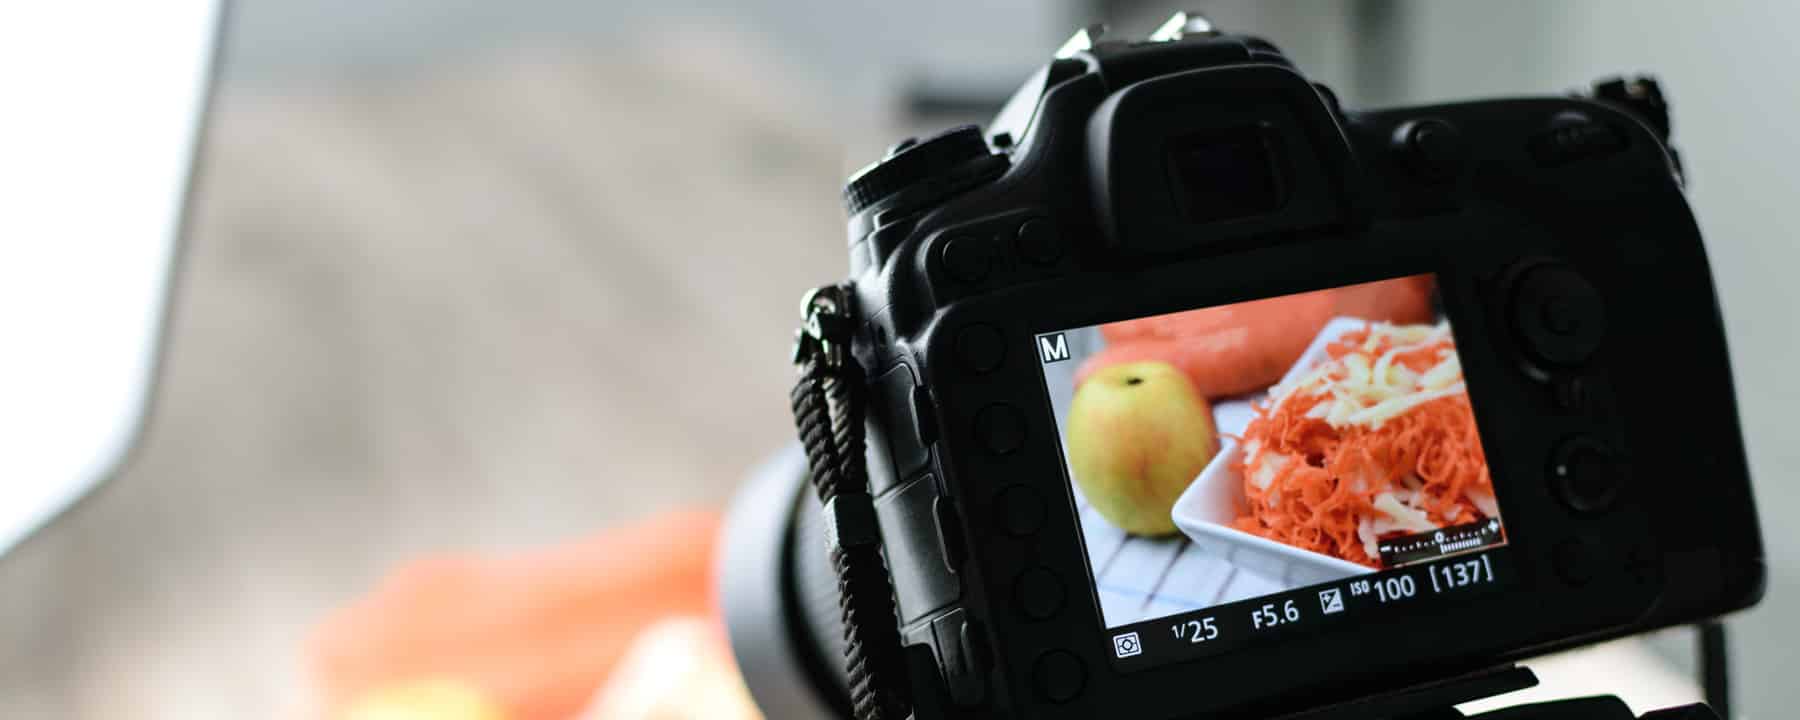 Display of professional camera during food recording - RAW format symbolic image